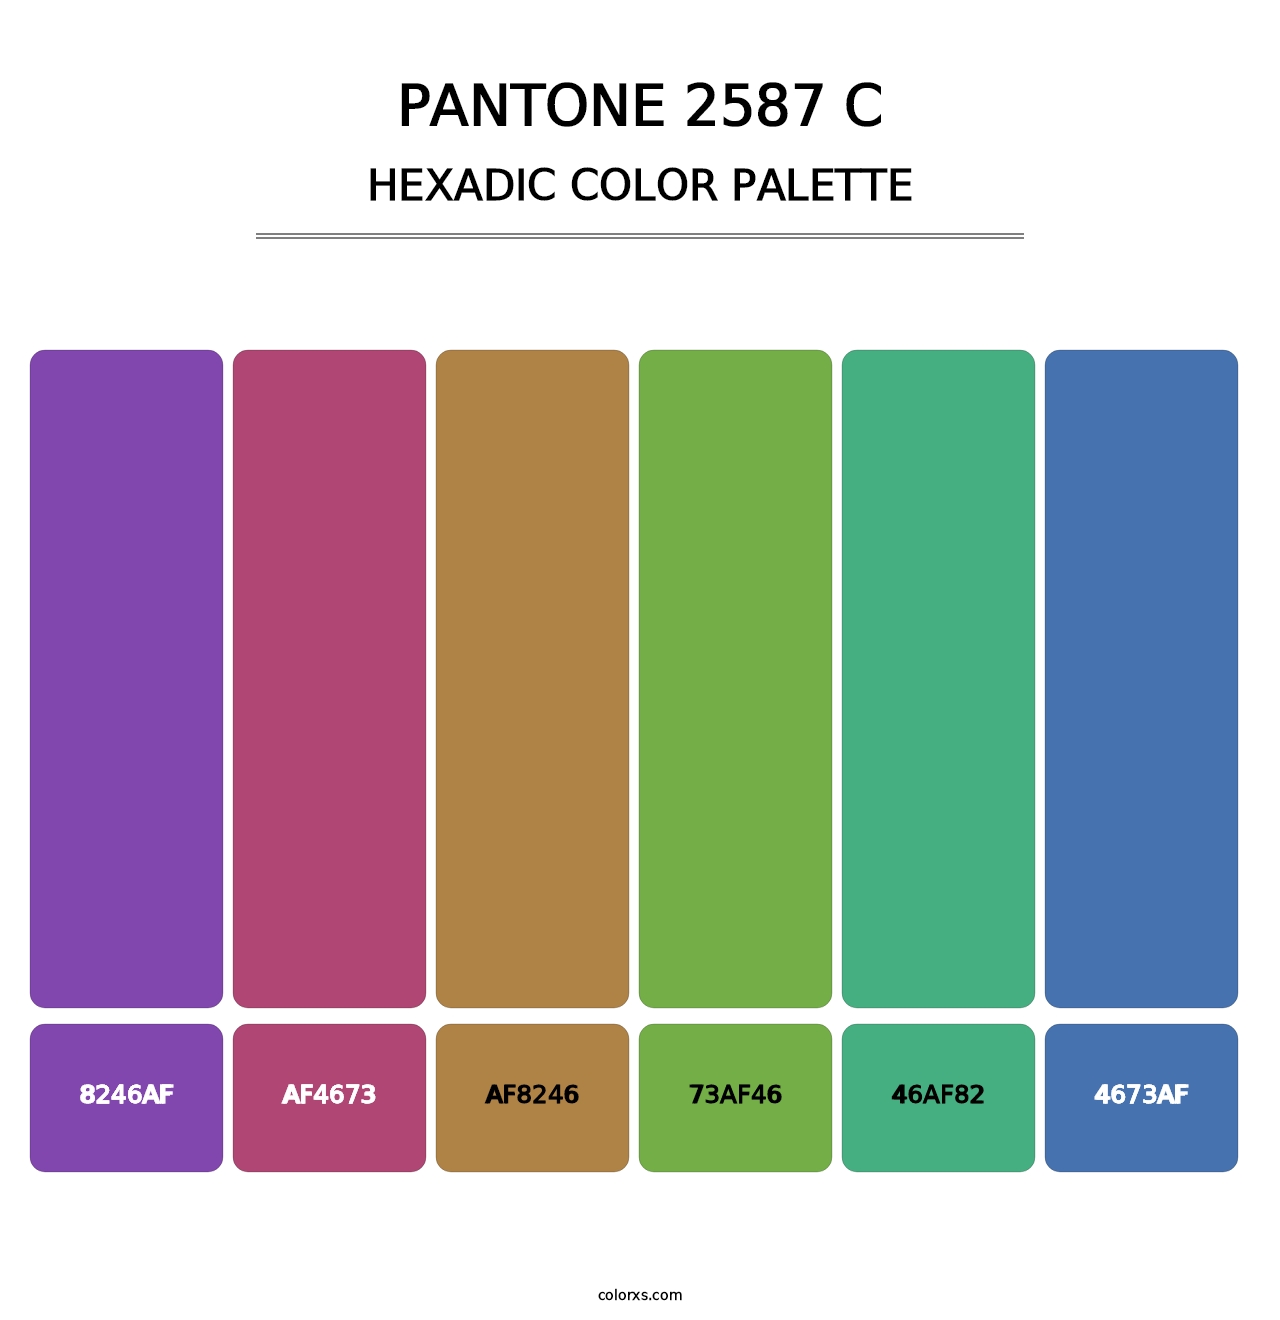 PANTONE 2587 C - Hexadic Color Palette